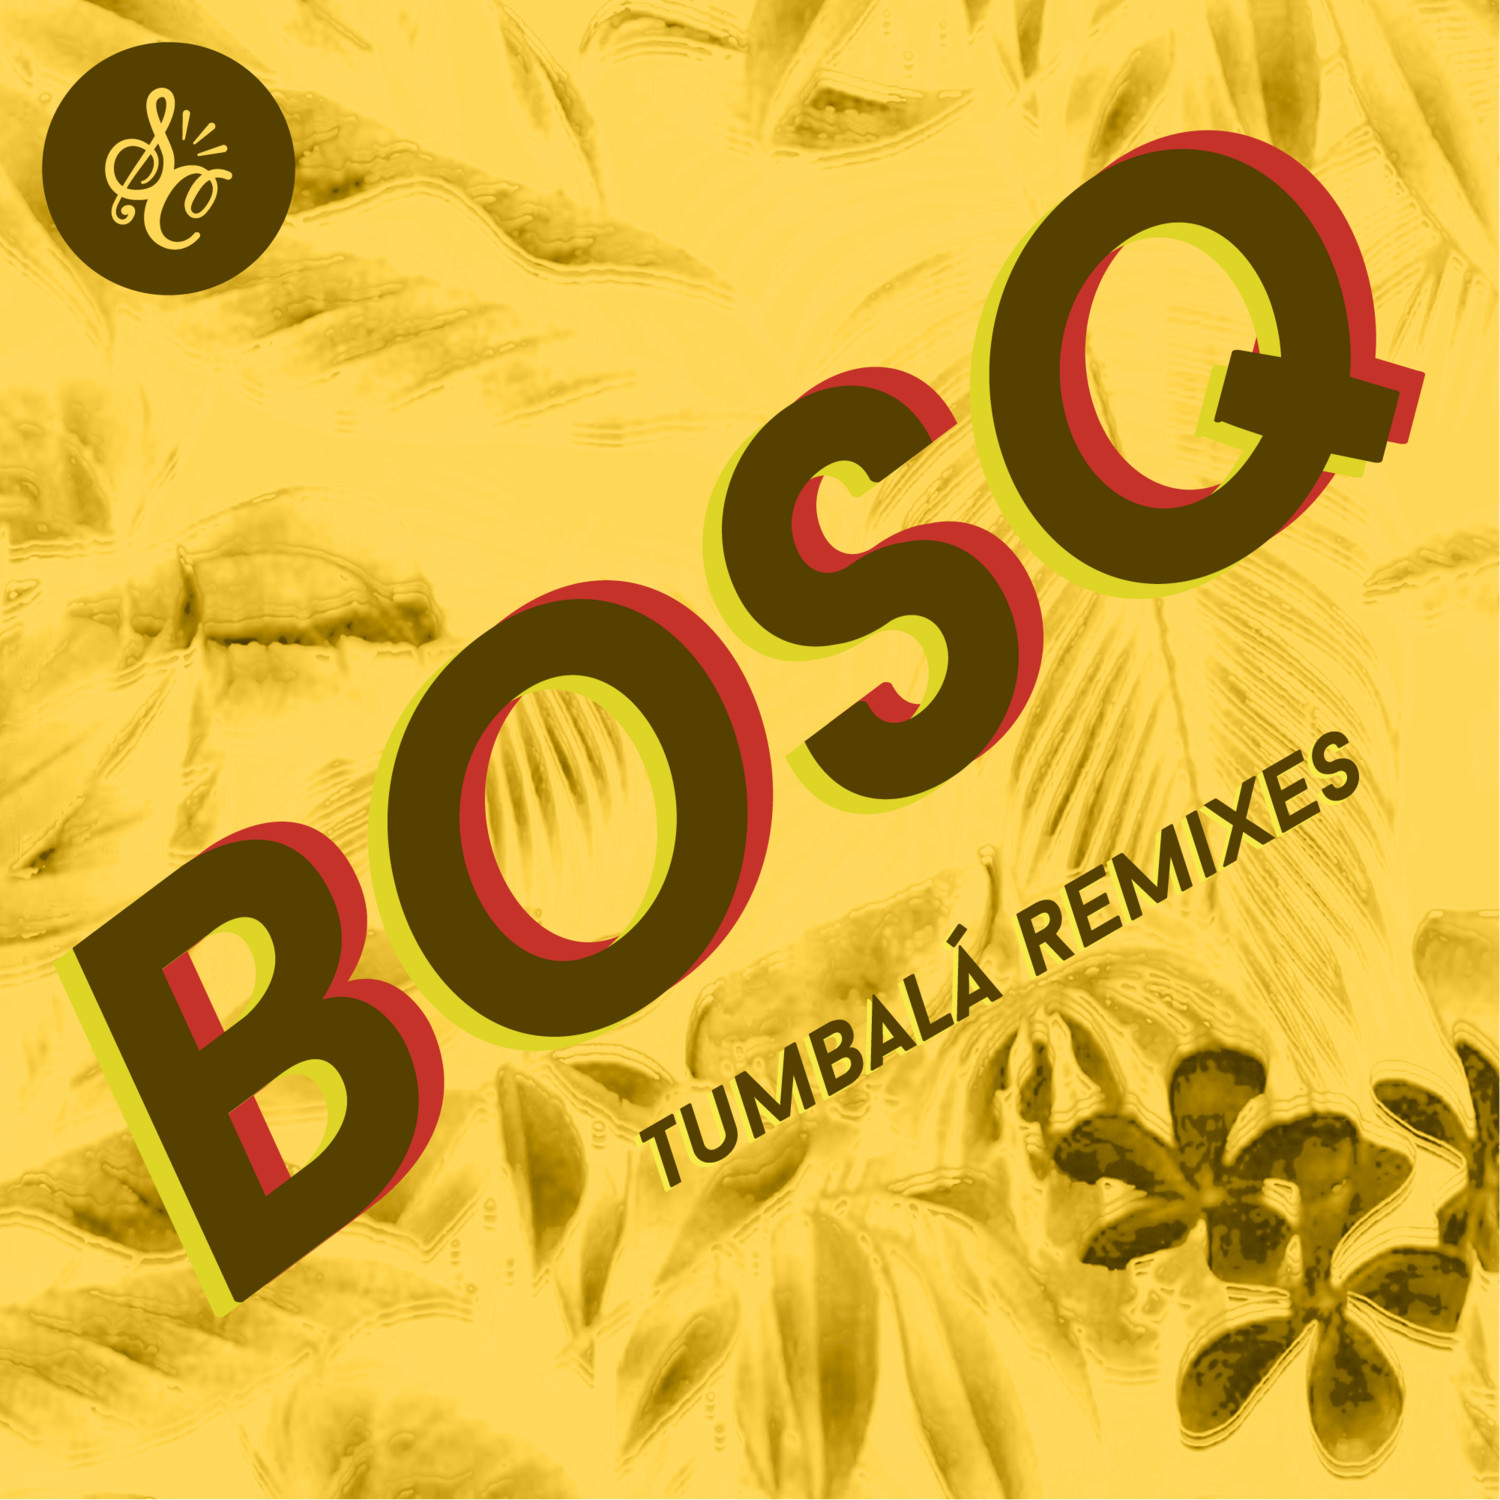 Tumbala Remixes